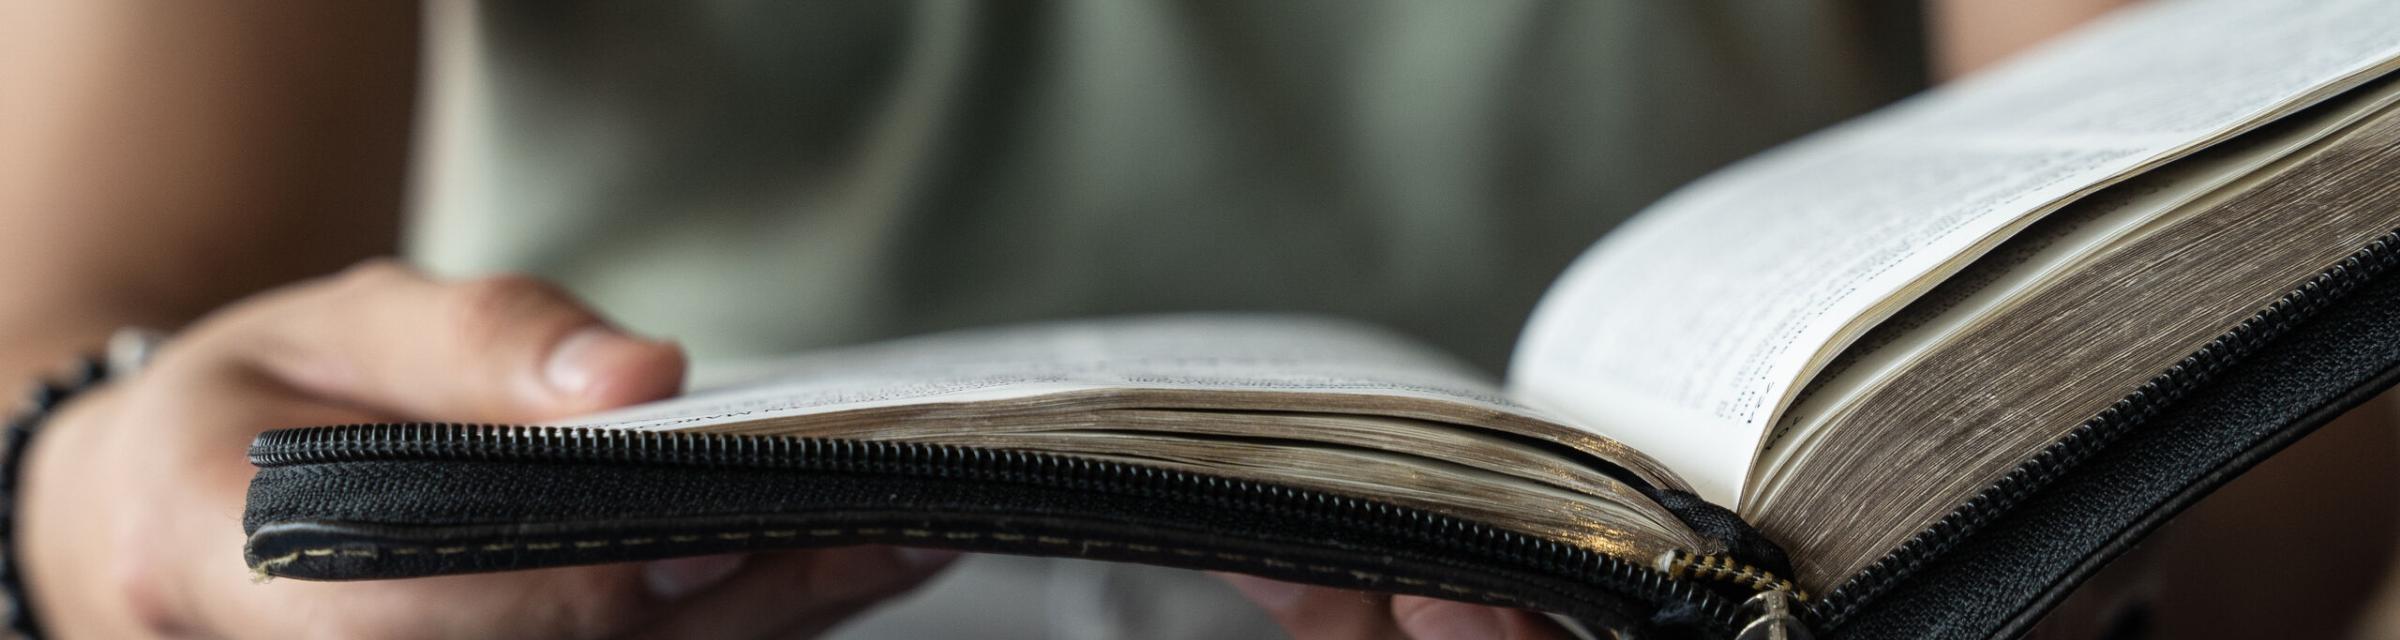 A man flips through a Spanish Bible. Photo by RJ Rempel.